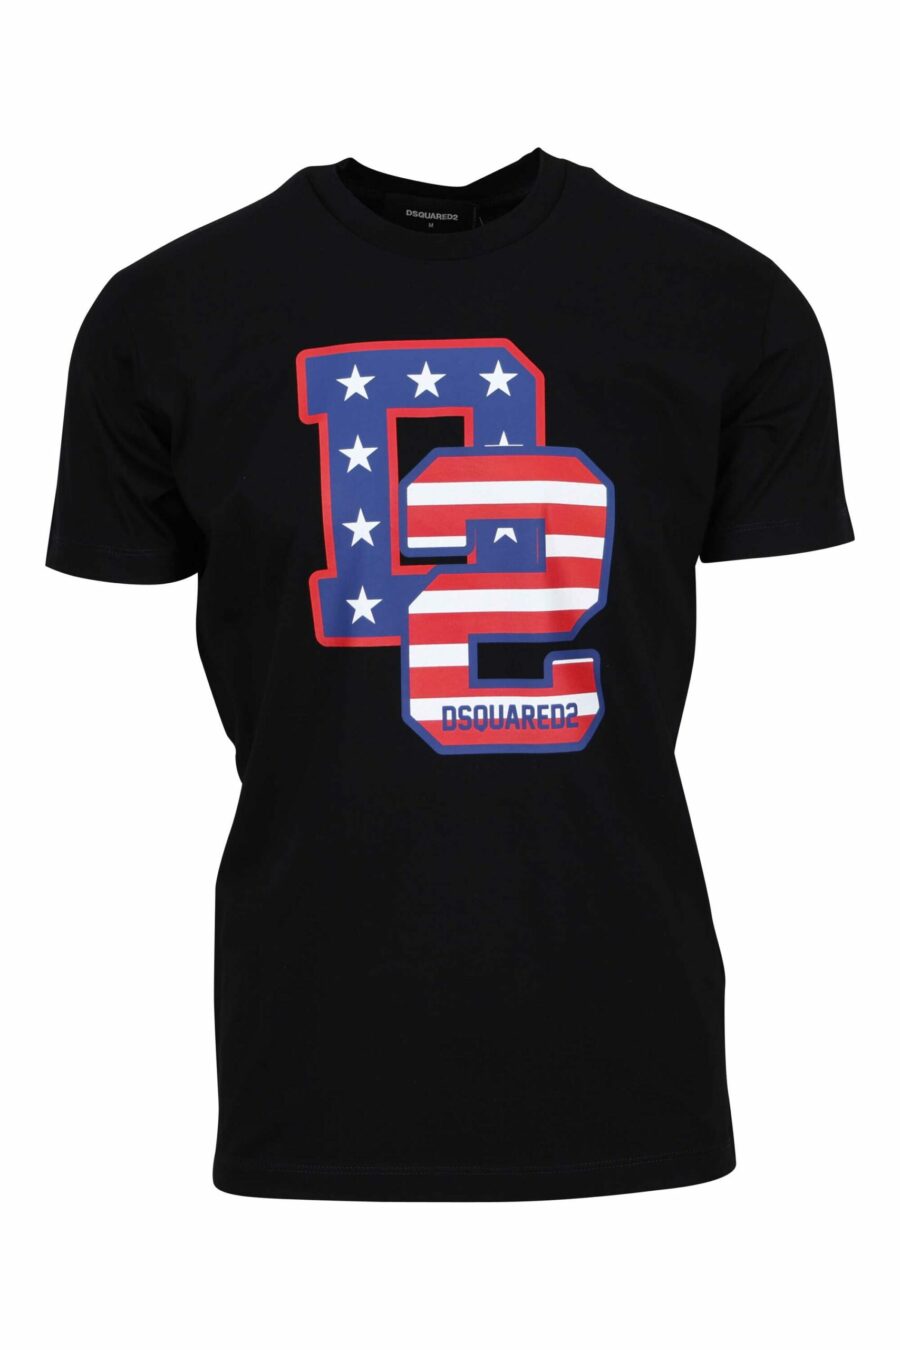 Black T-shirt with maxilogo "D2" flag - 8054148332518 scaled